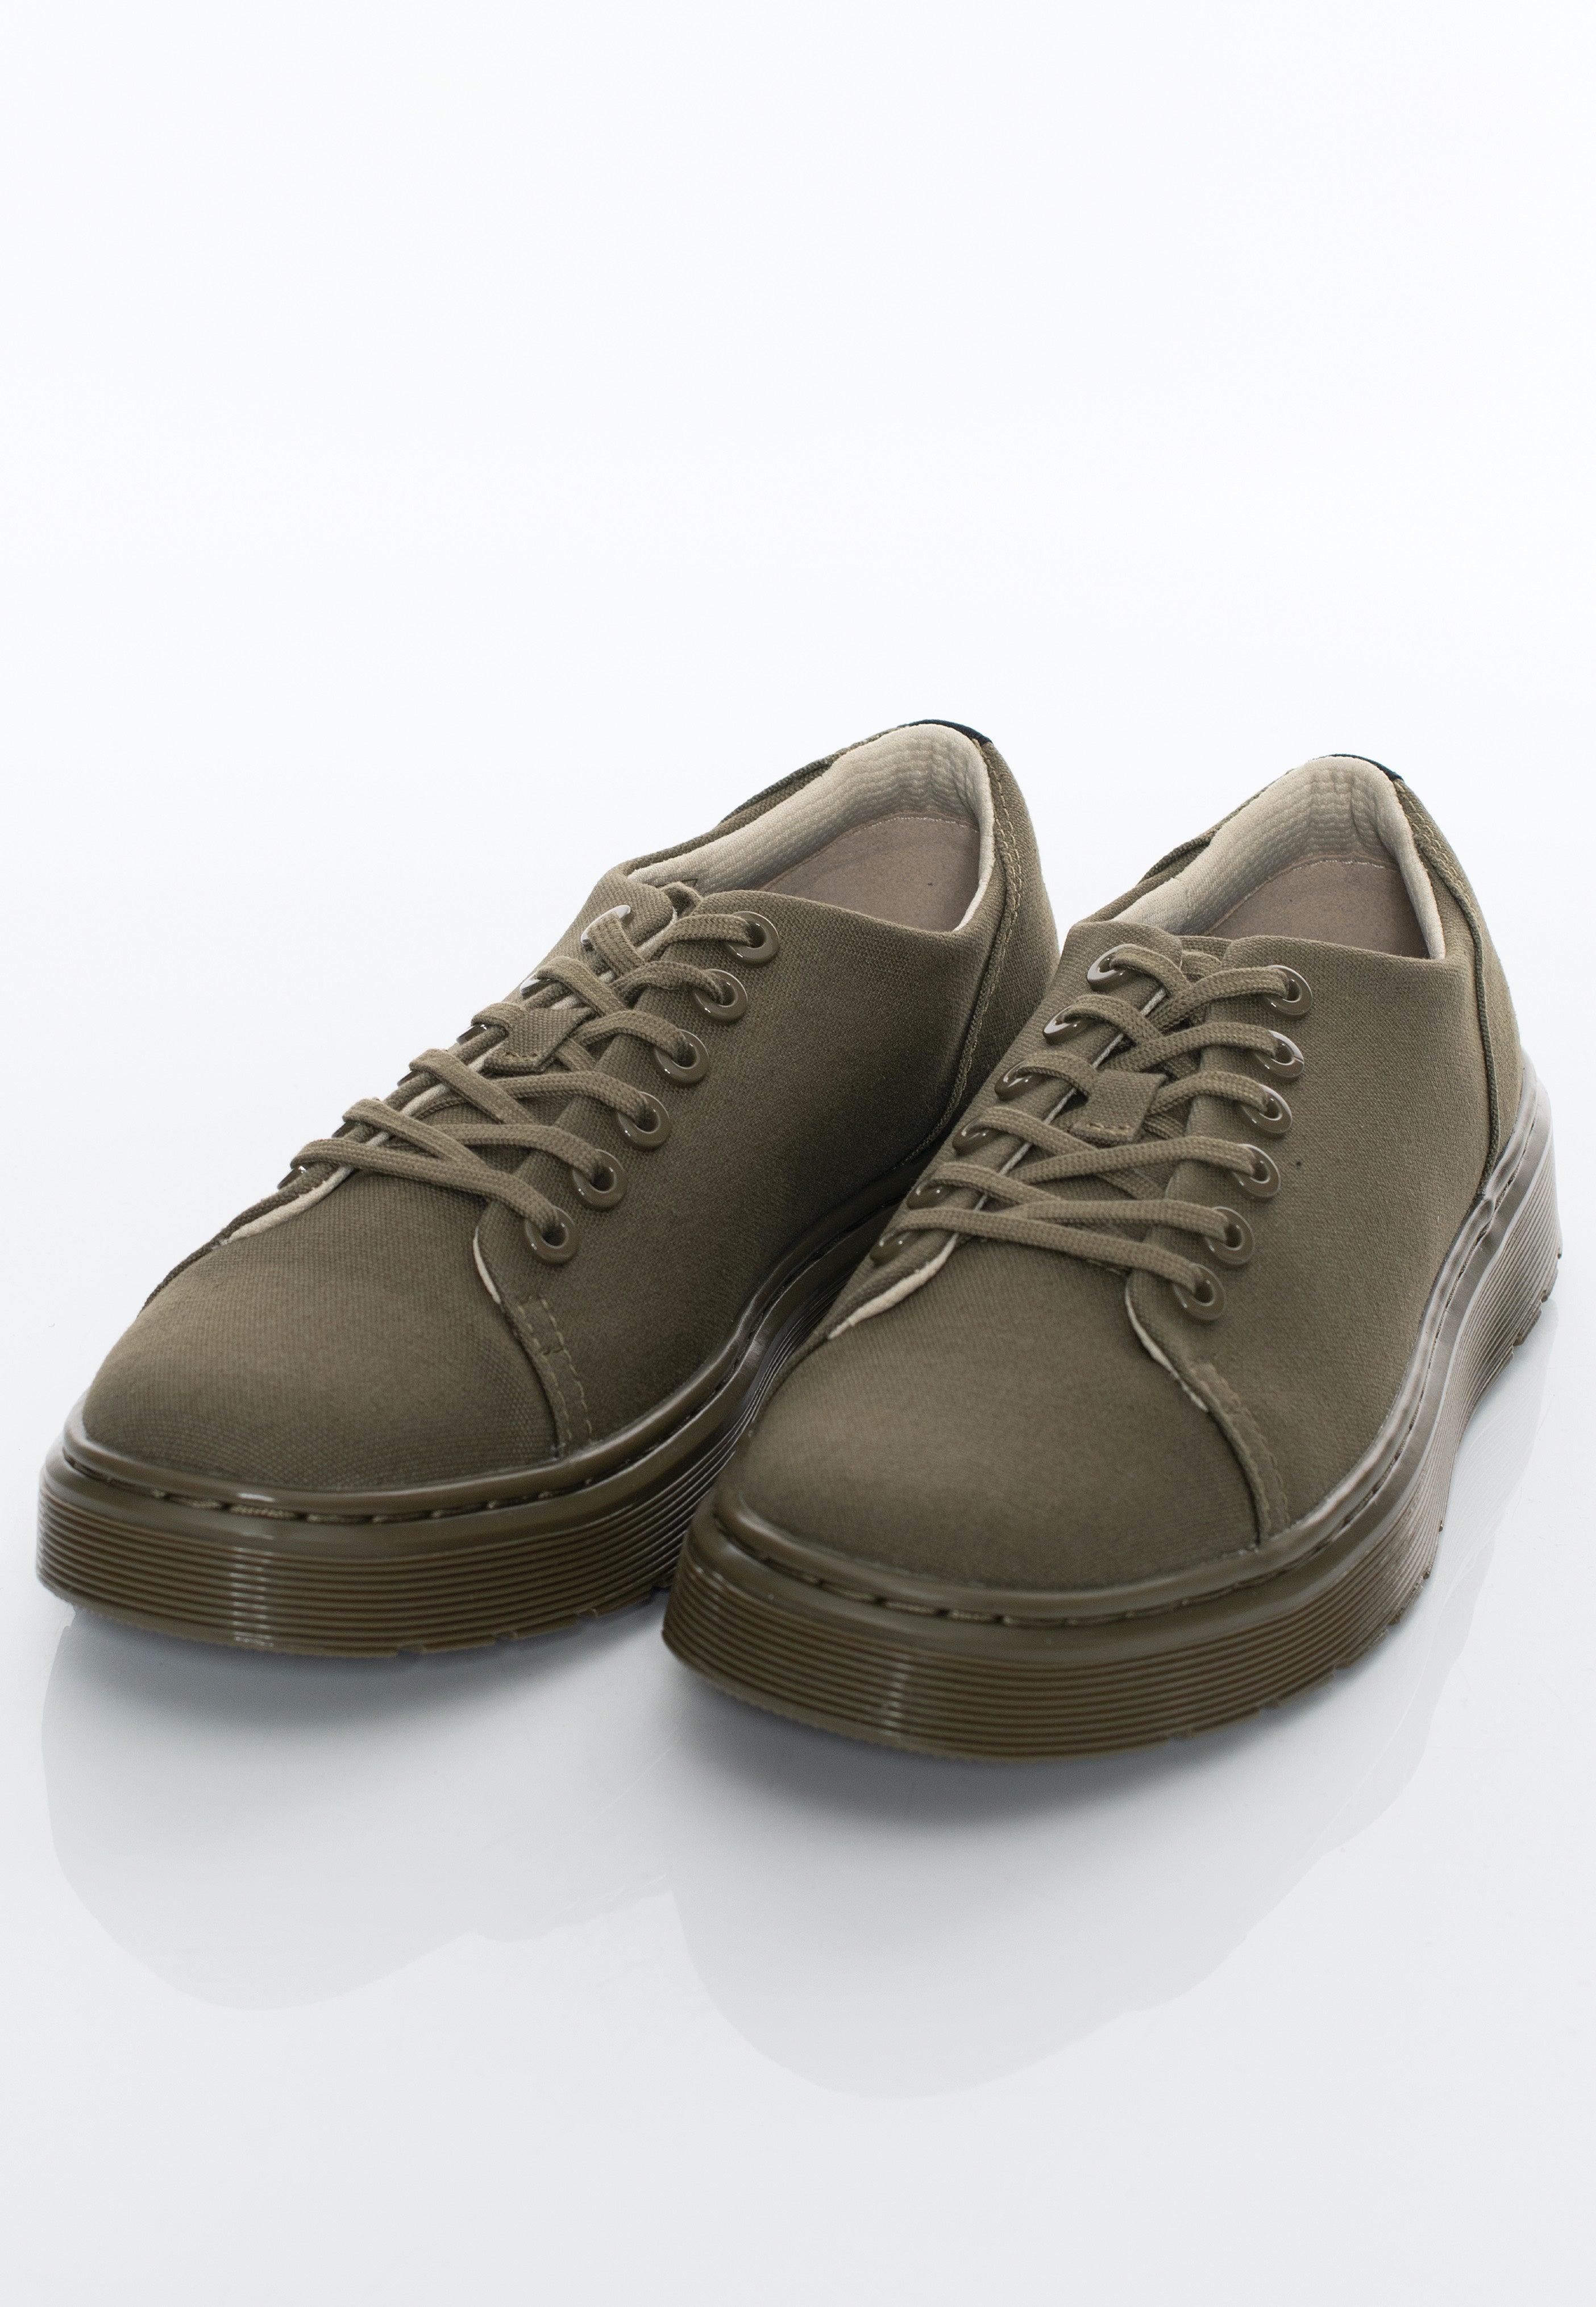 Dr. Martens - Dante 10 Oz Canvas/Olive Milled Coated Leather - Shoes